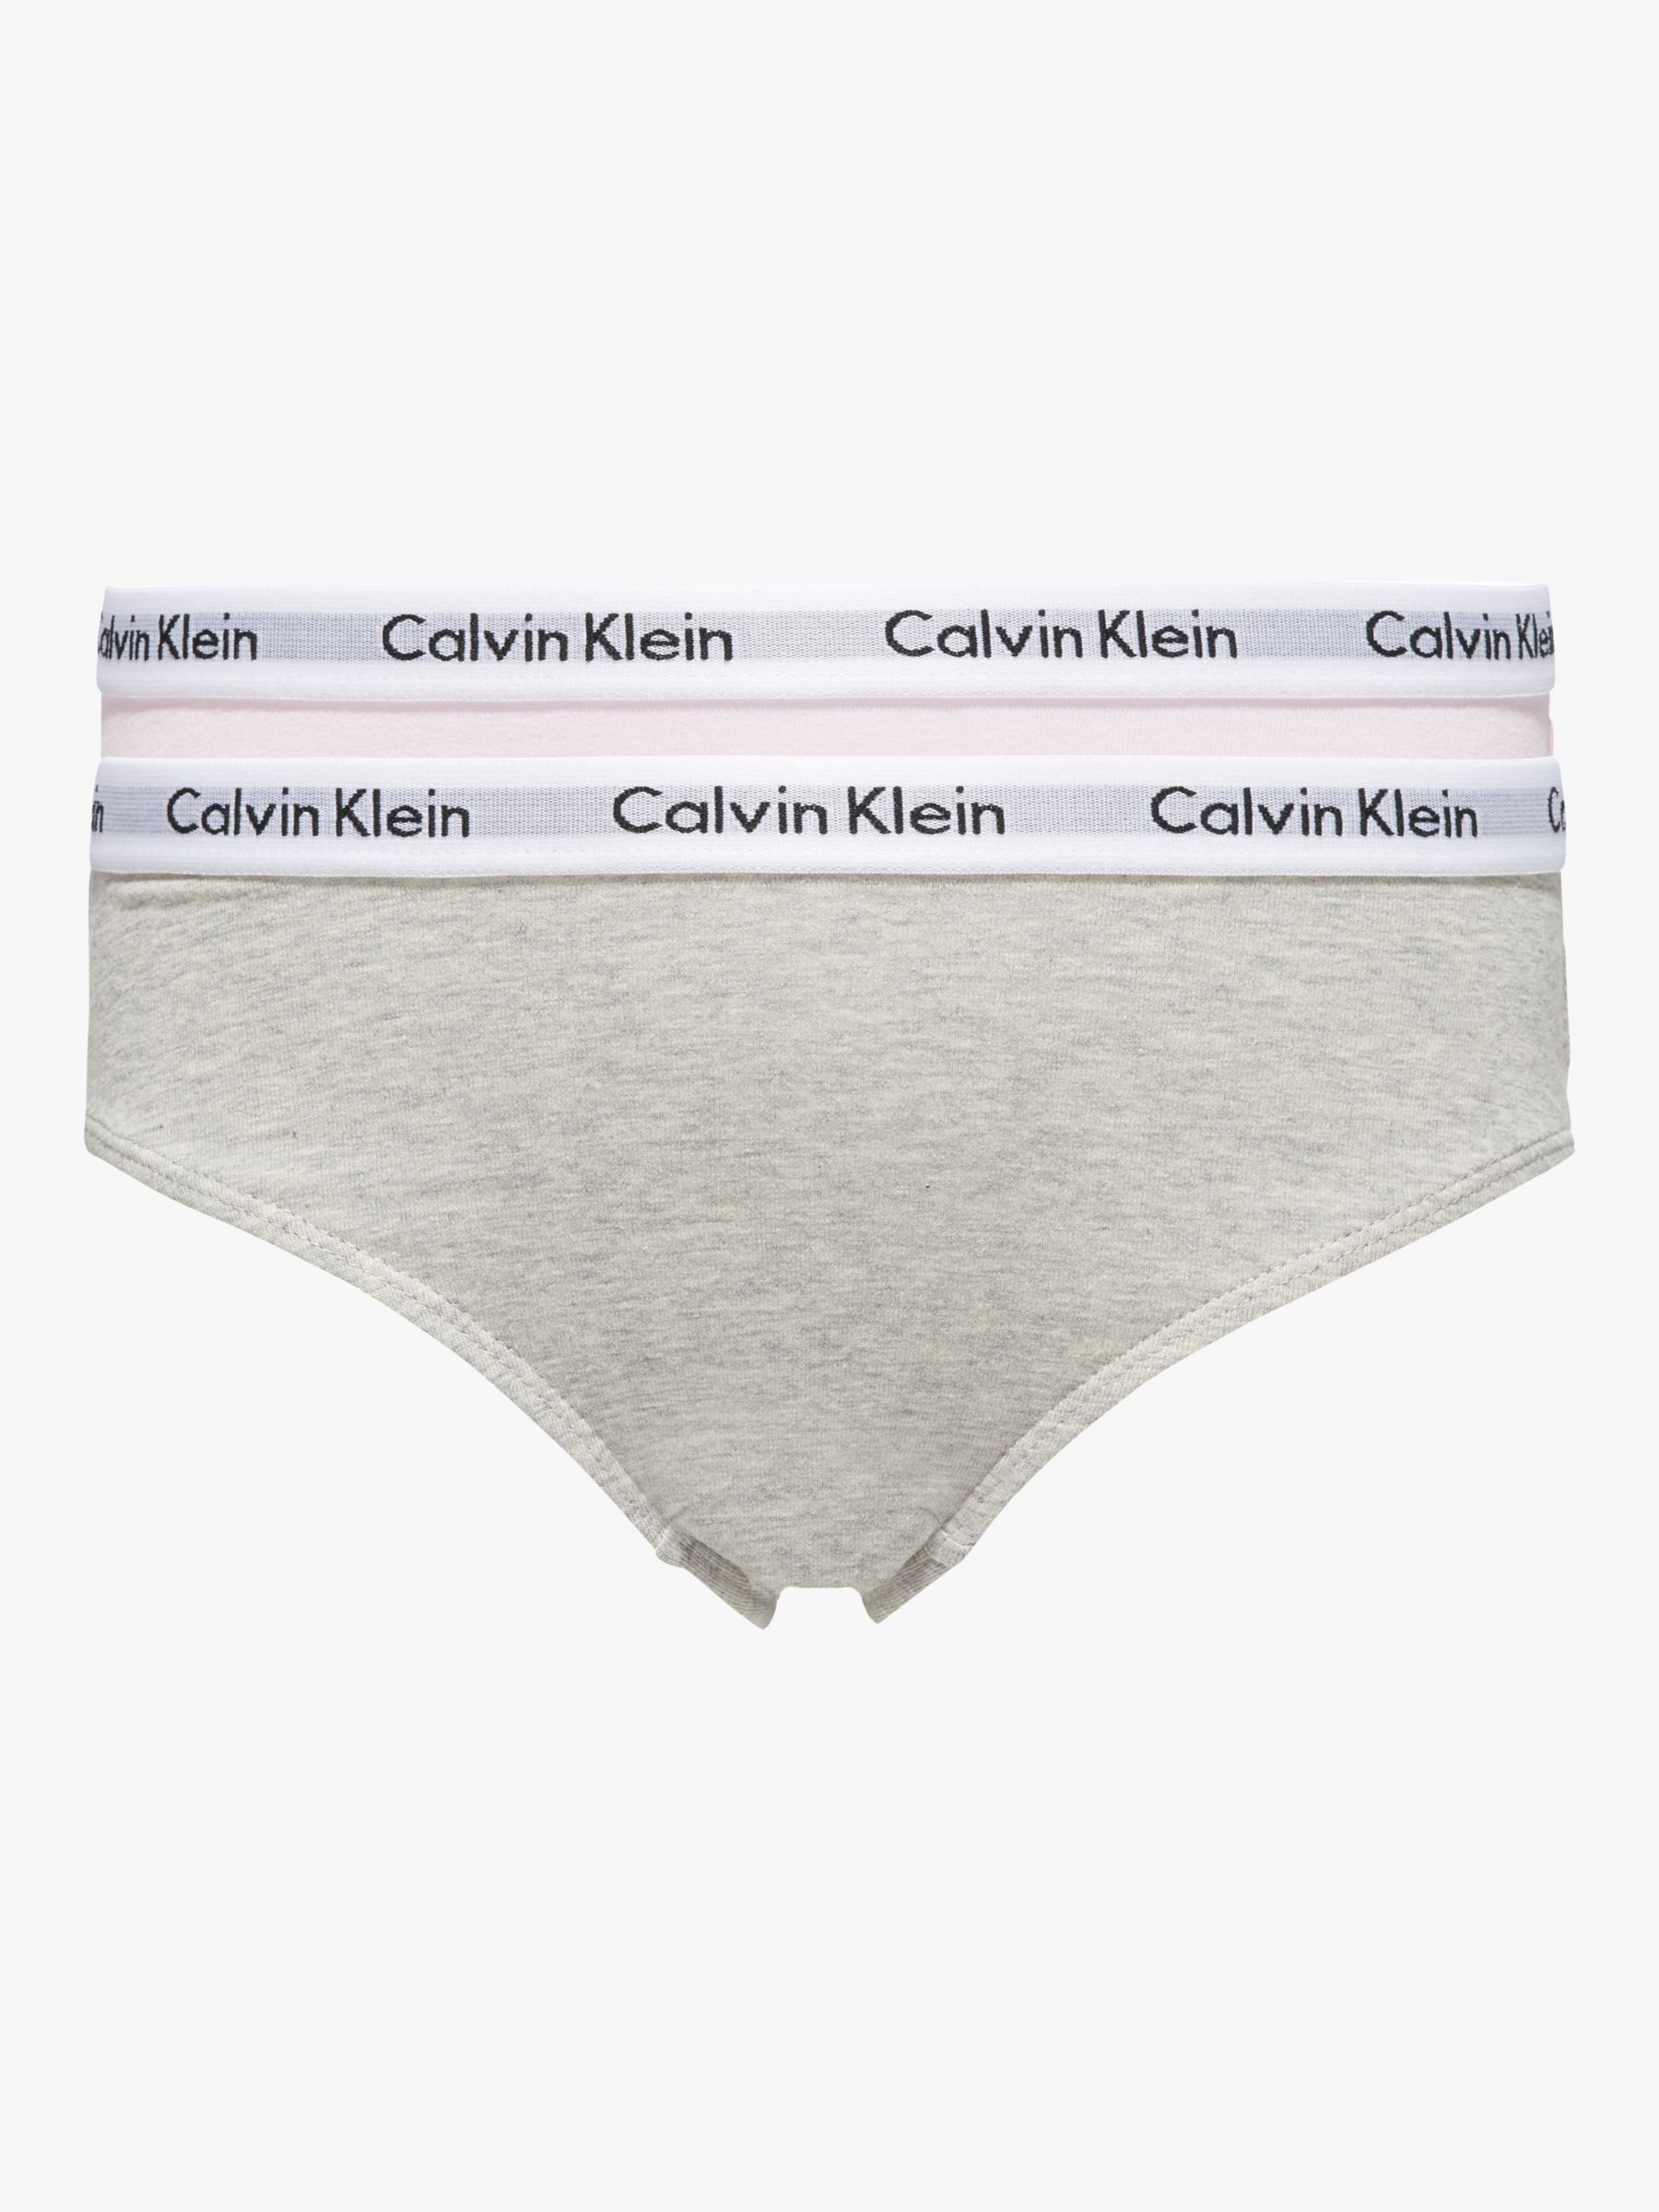 Calvin Klein Kids' Bikini Briefs, Pack of 2, Grey/Pink at John Lewis &  Partners